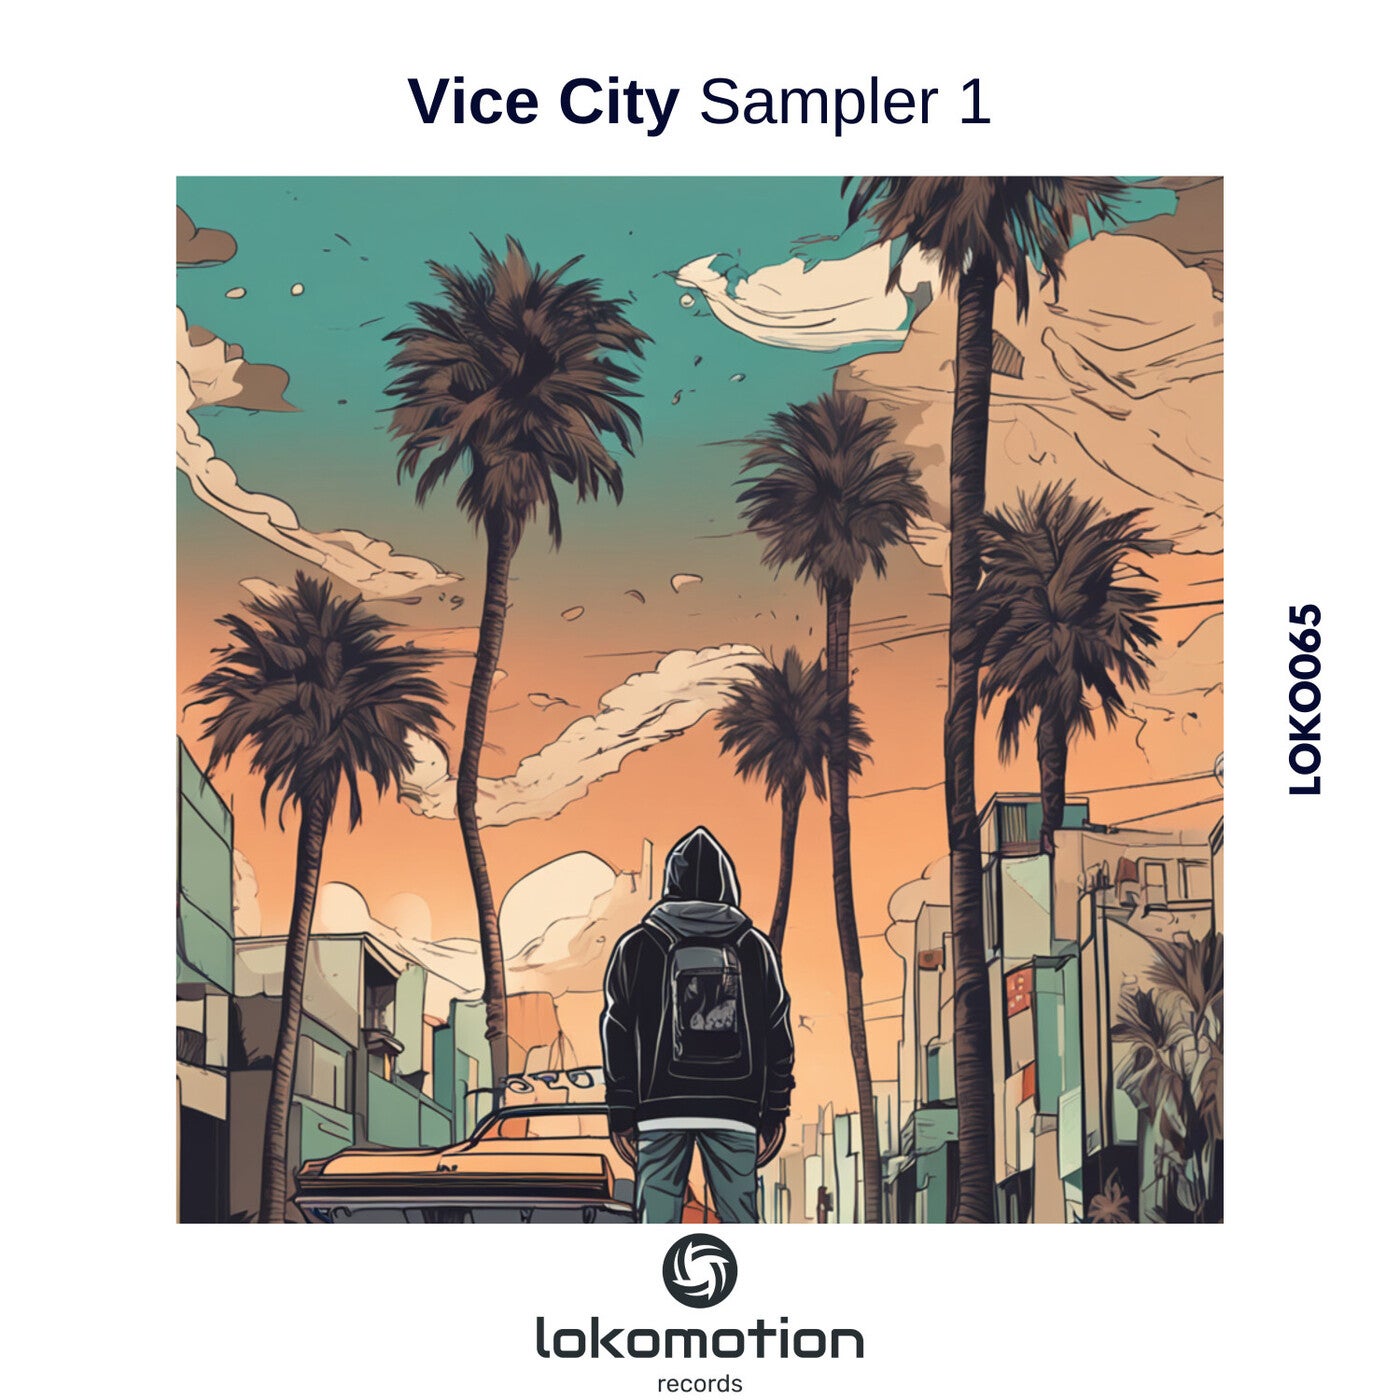 Vice City Sampler 1